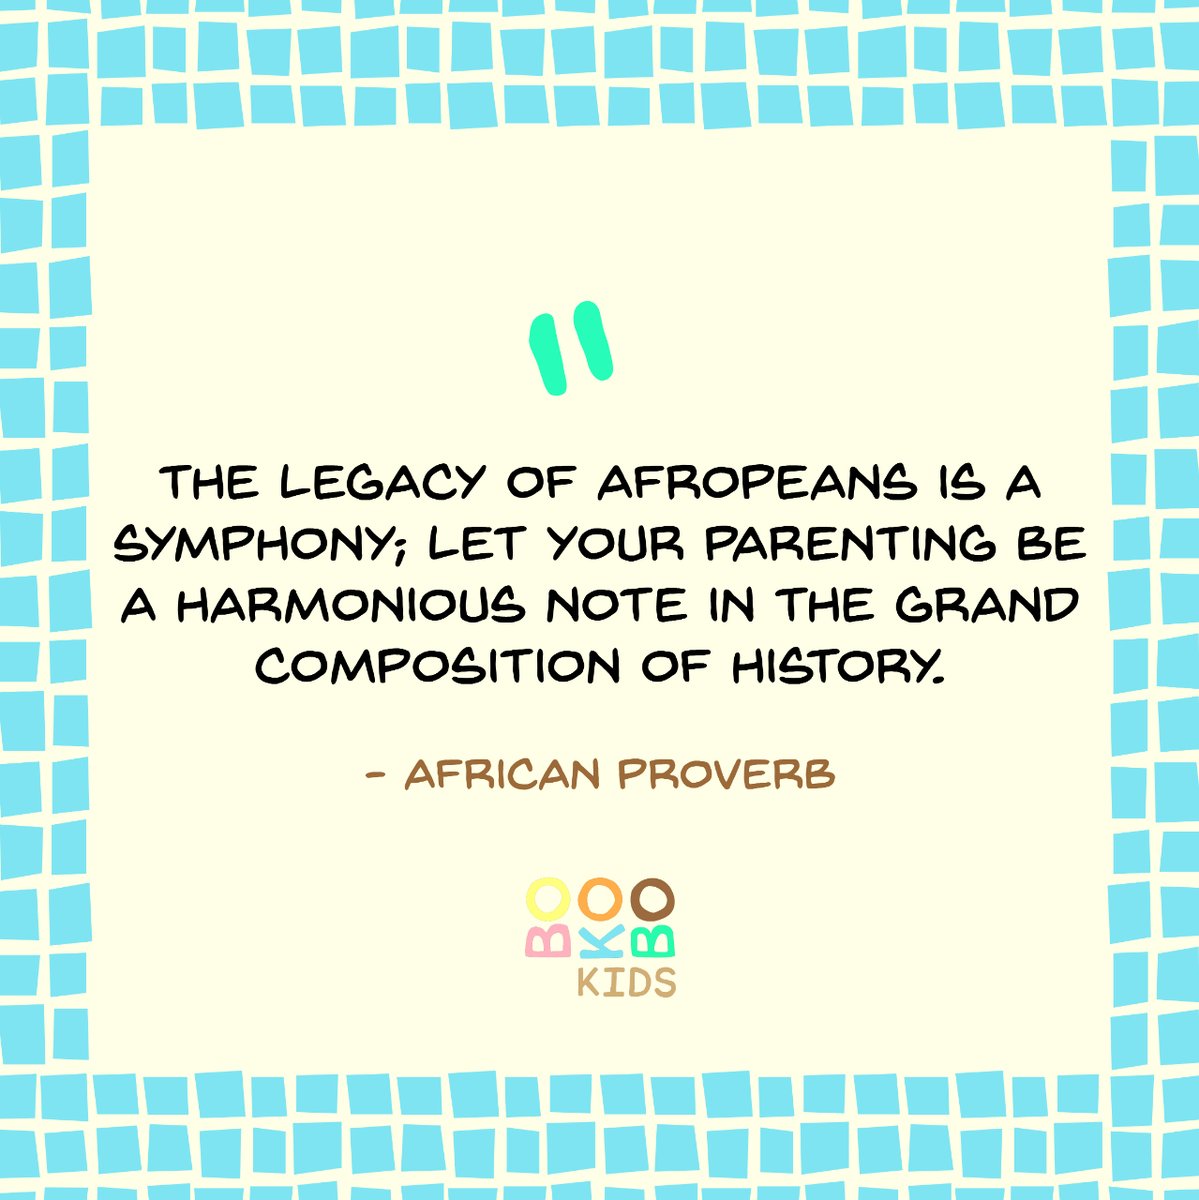 African Wisdom for the Week

#bokobokids #africanwisdom #ancientwisdom #africanstory #diversity #africankids #blackkids #blackstory #education #education4all #educationforkids #mondaymotivation